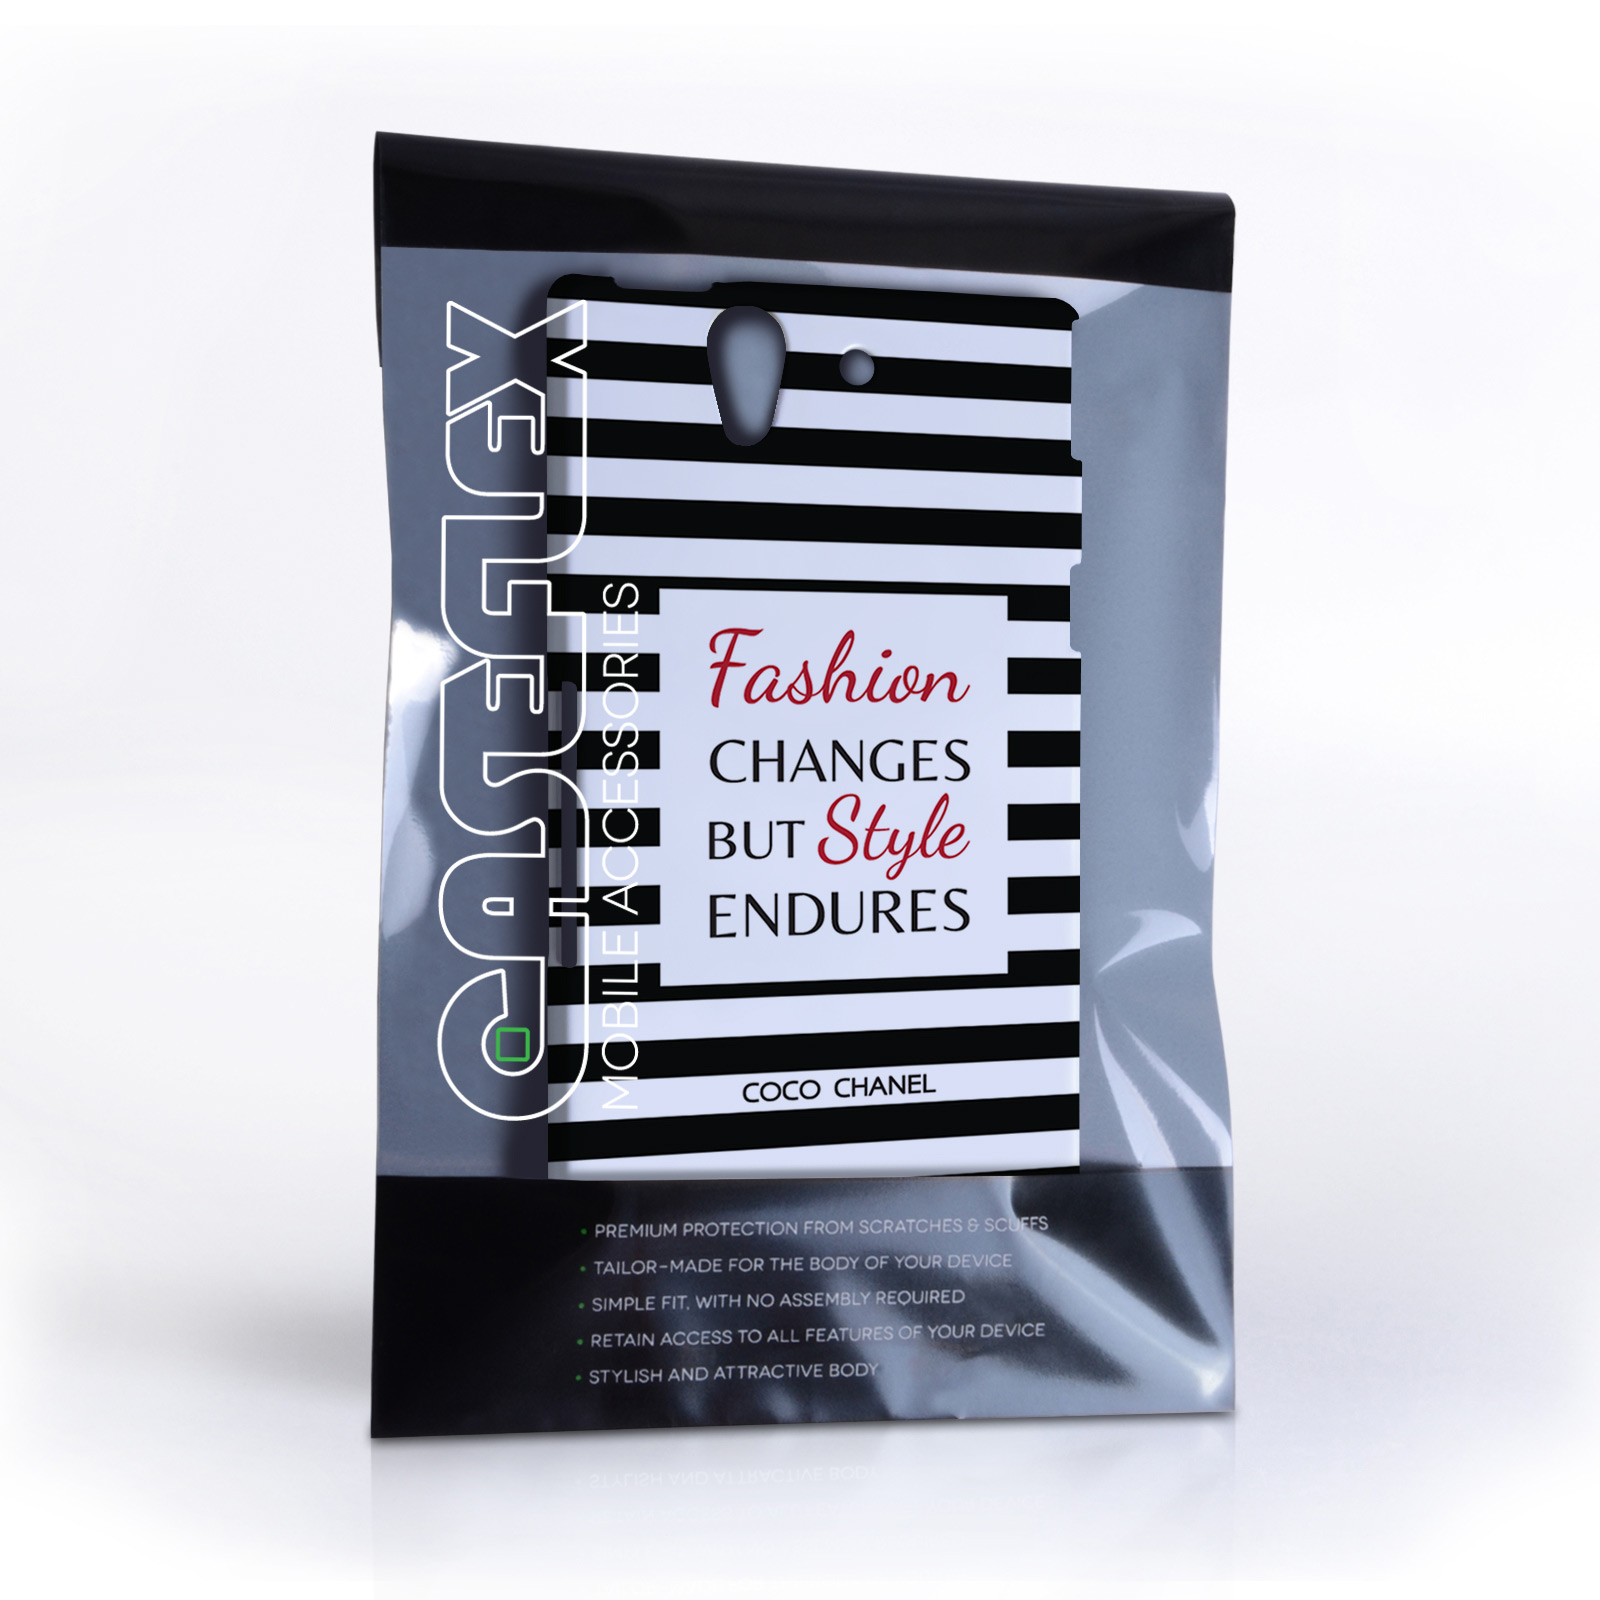 Caseflex Sony Xperia Z Chanel ‘Fashion Changes’ Quote Case – Black and White